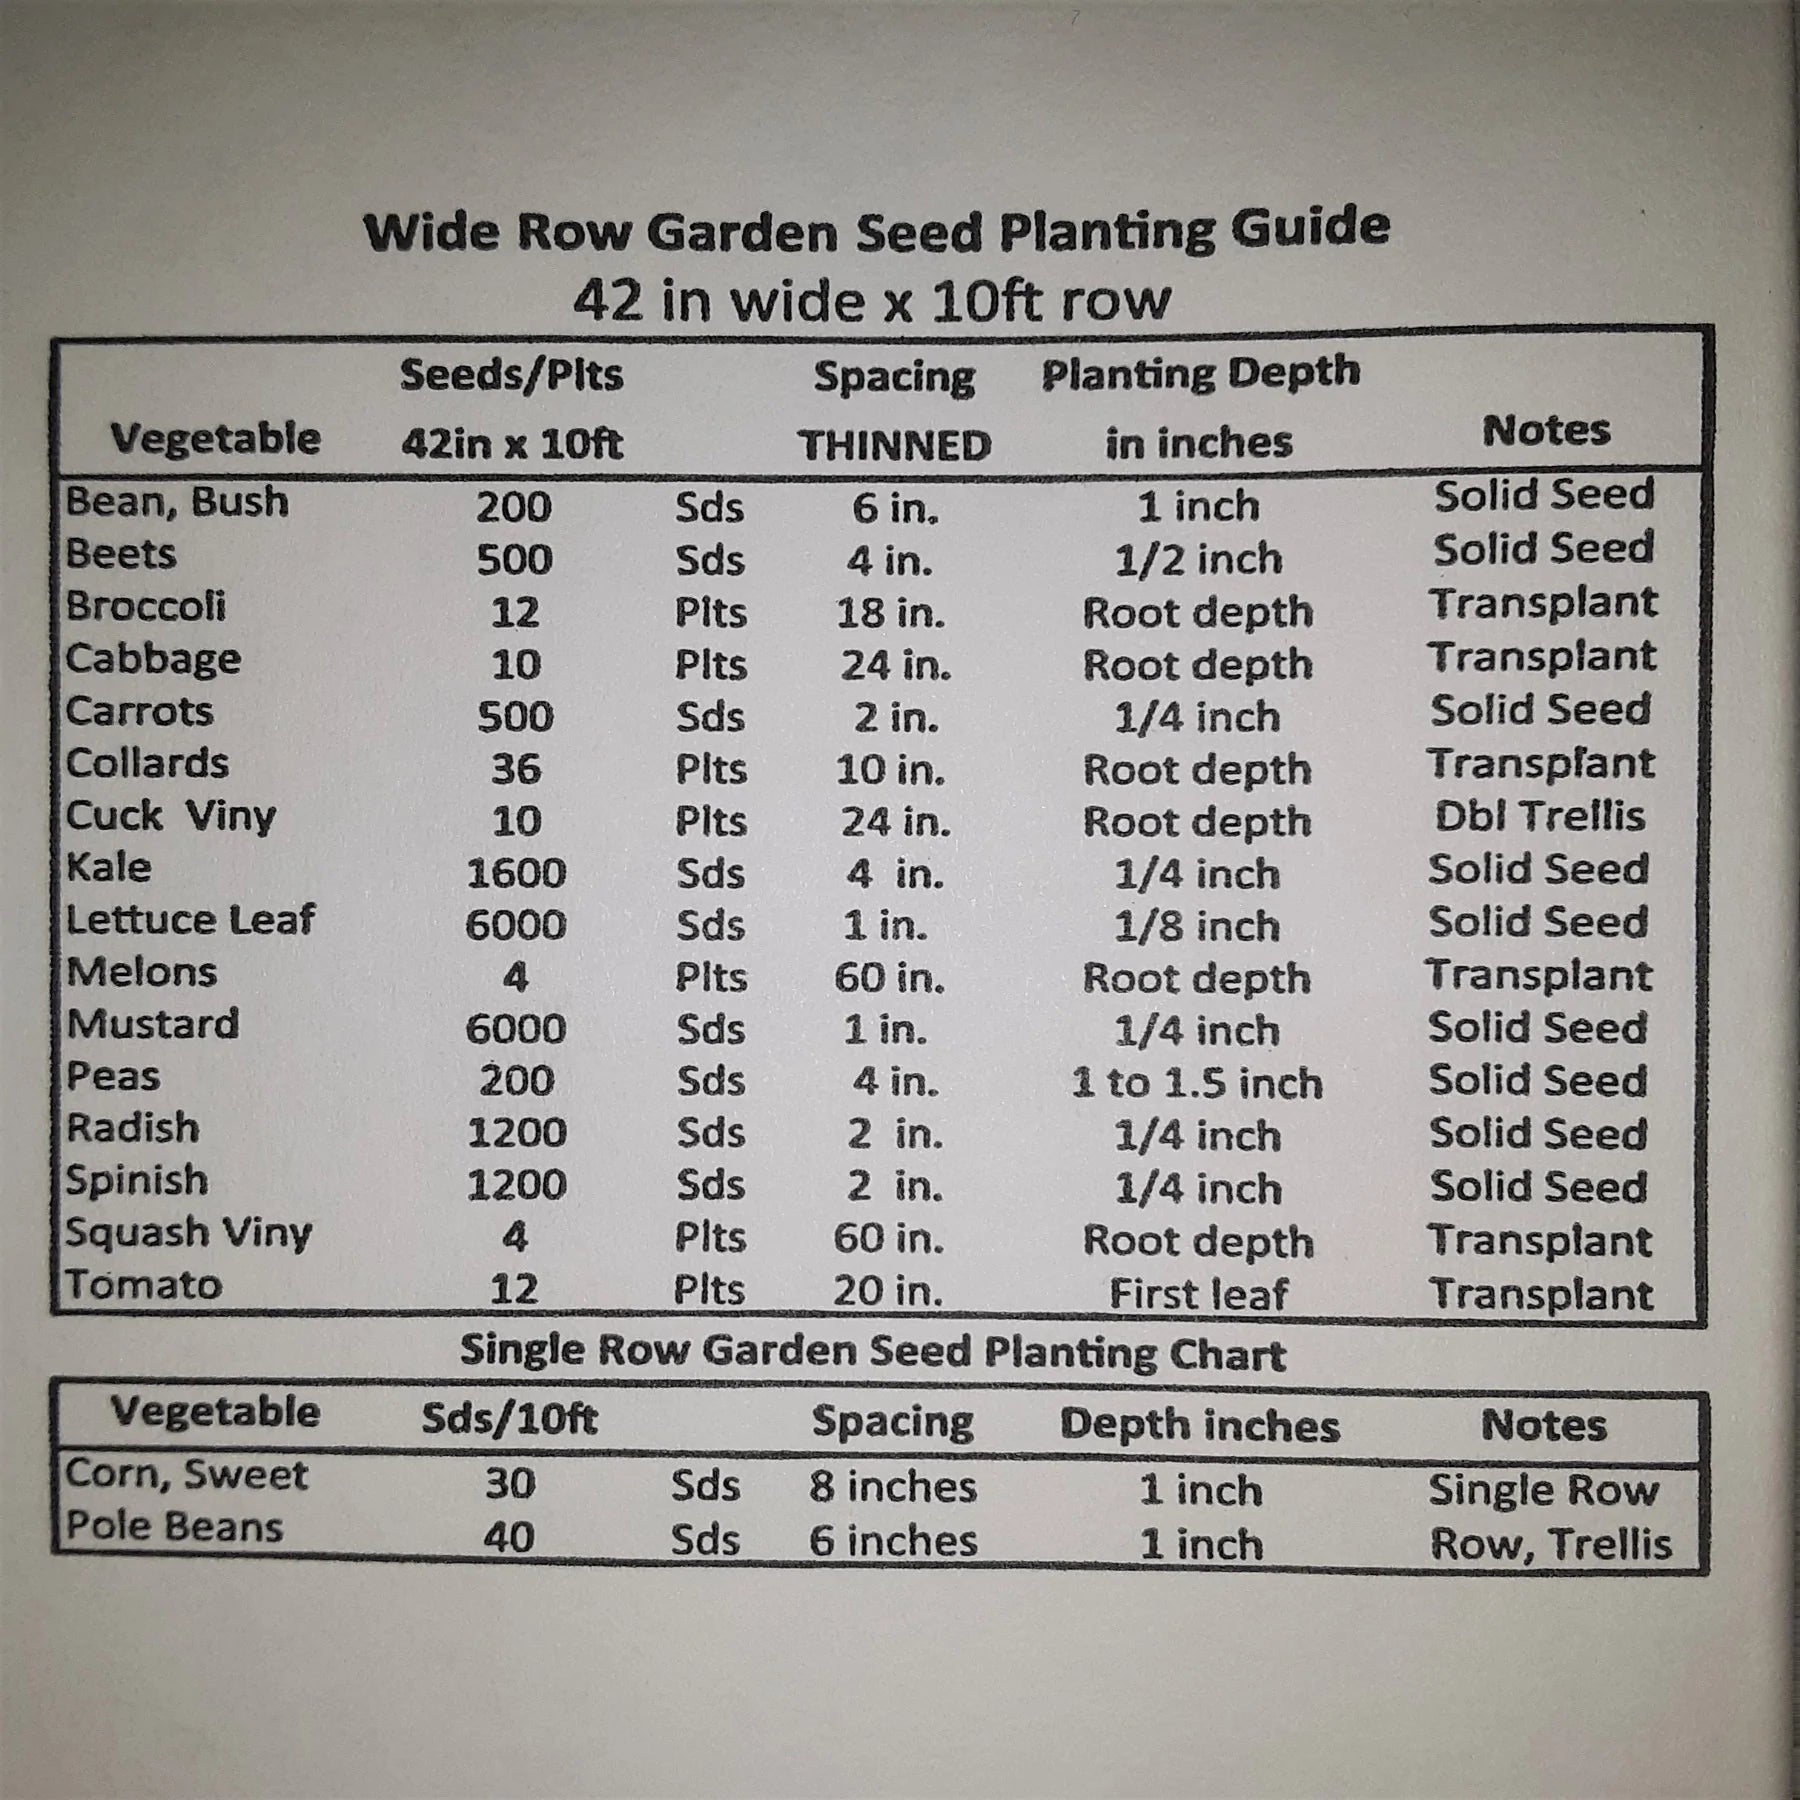 Honey Select Treated Yellow Hybrid Sweet Corn Seed